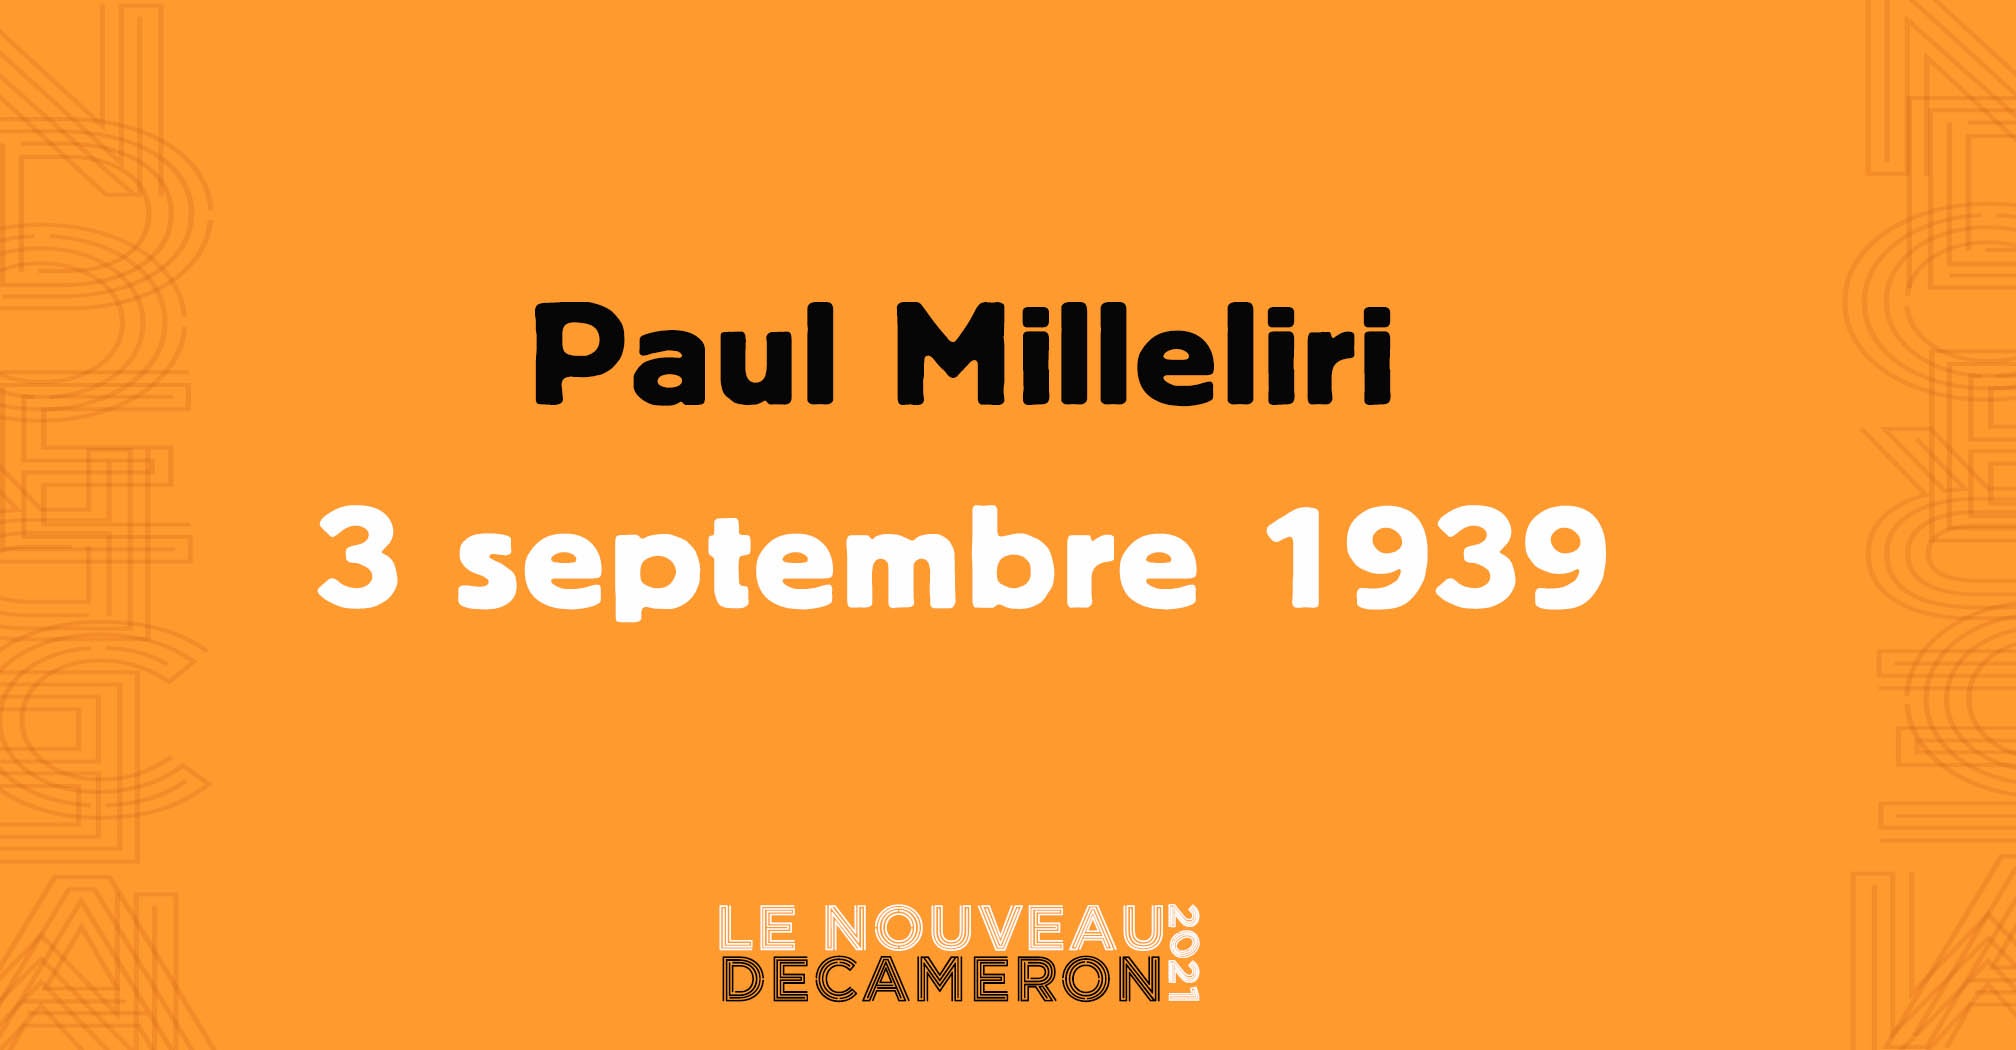 Paul Milleliri - 3 septembre 1939